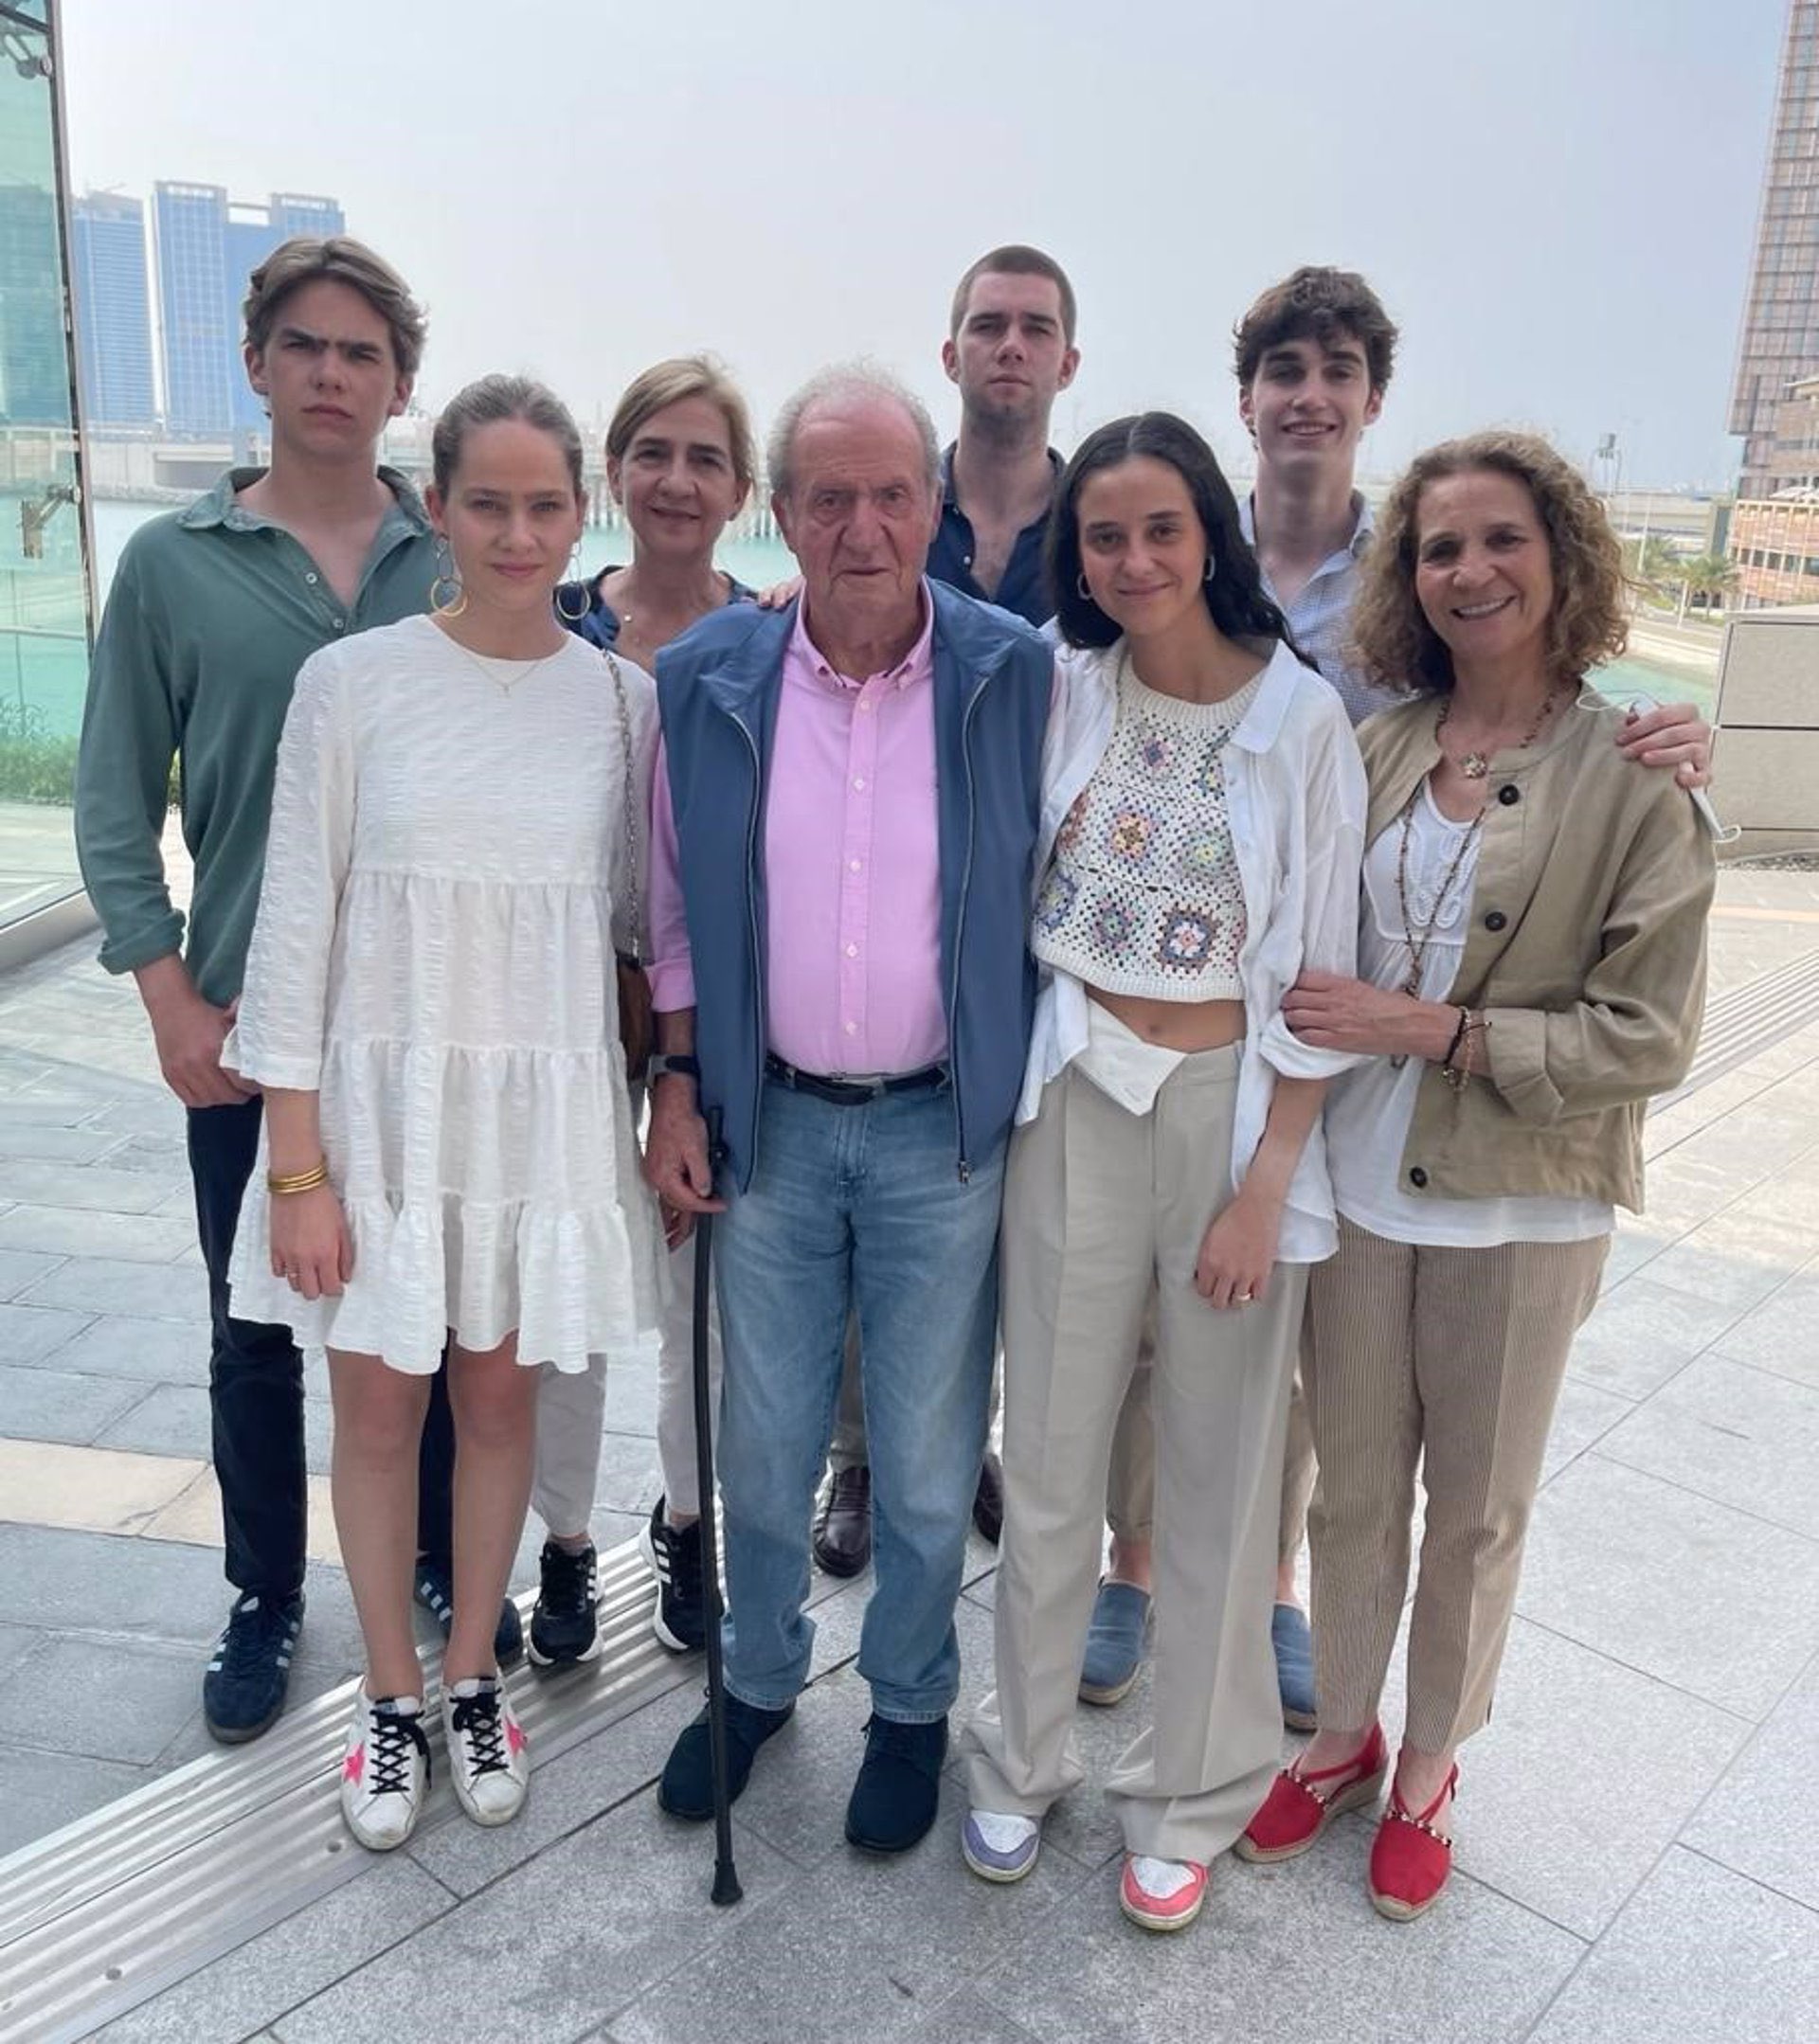 Joan Carles nega photoshop. El "miracle" d'Abu Dhabi: Pablo Urdangarin amb cames